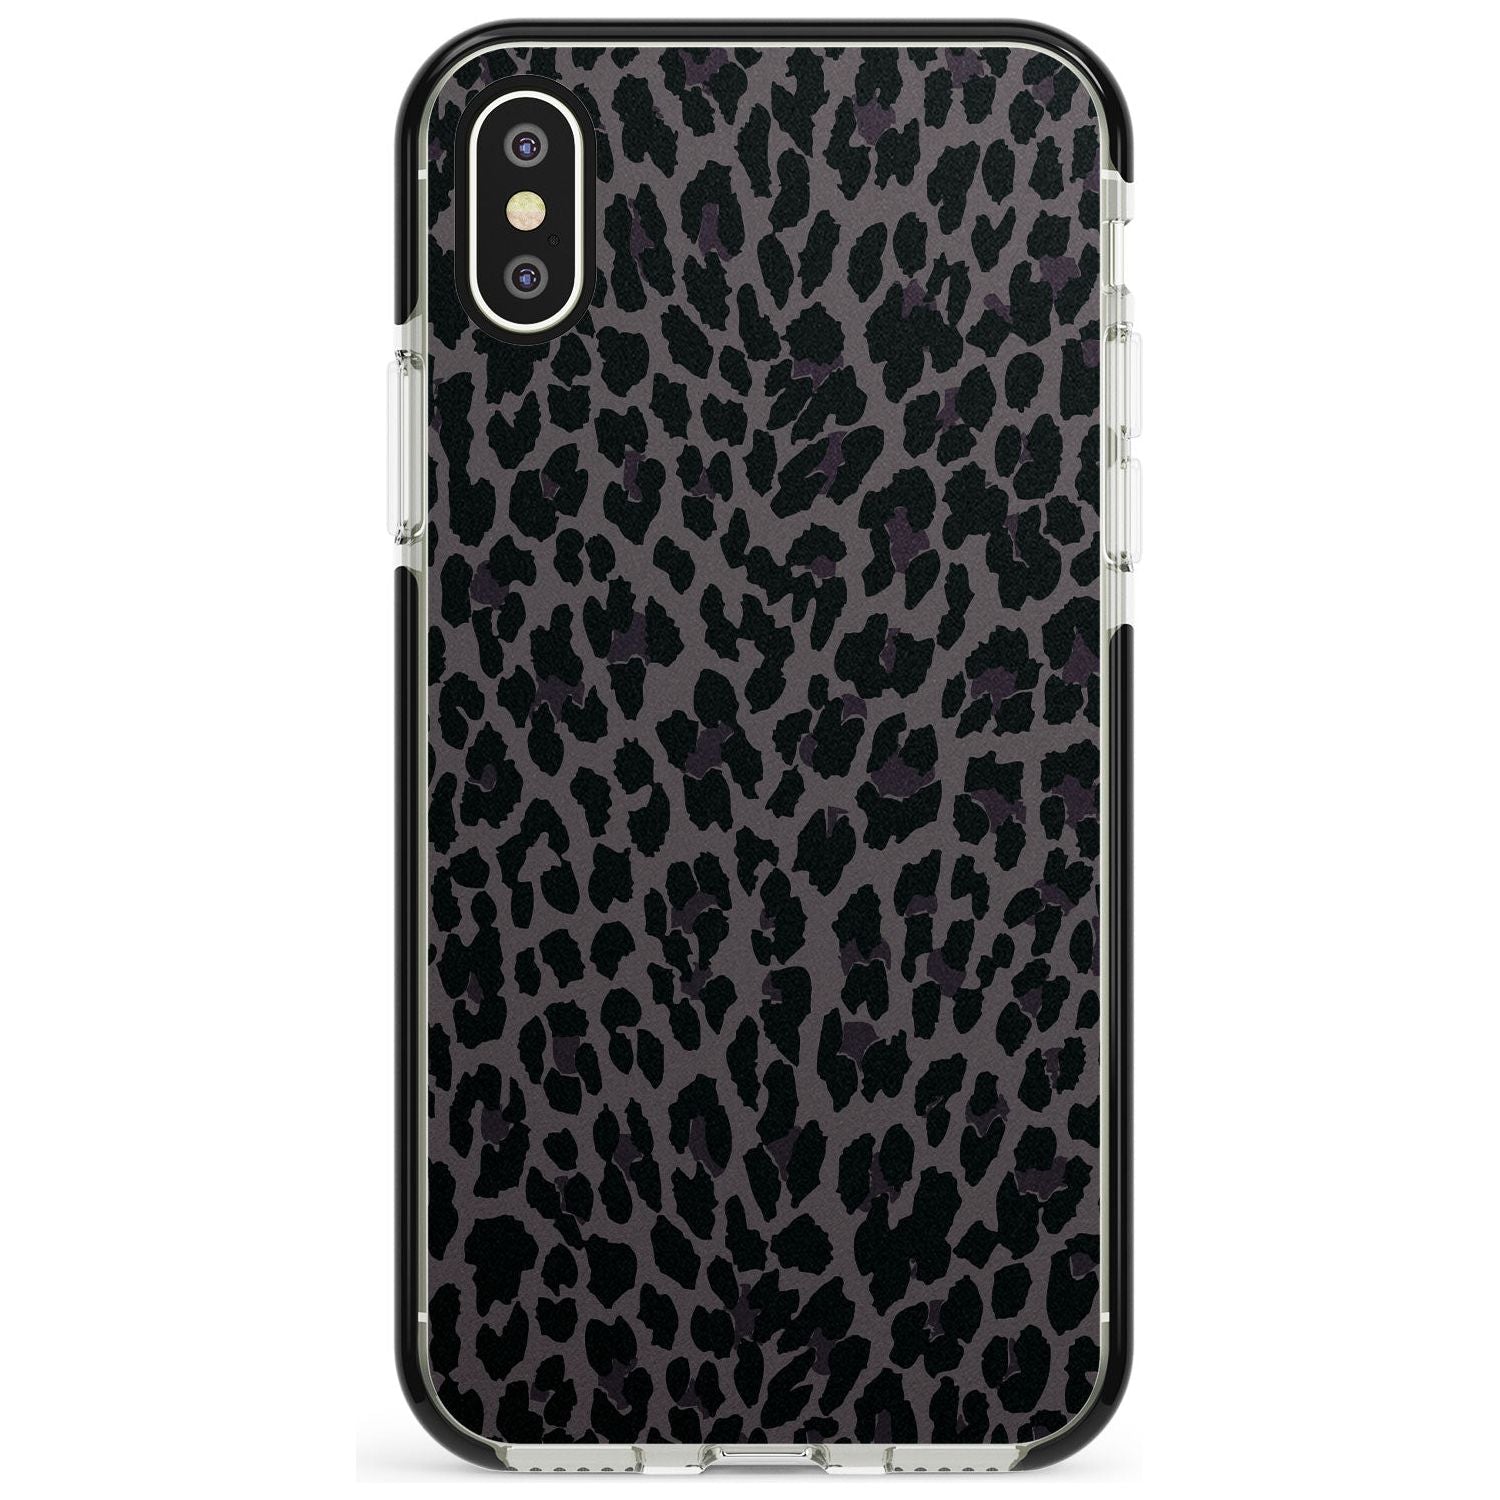 Dark Animal Print Pattern Small Leopard Black Impact Phone Case for iPhone X XS Max XR